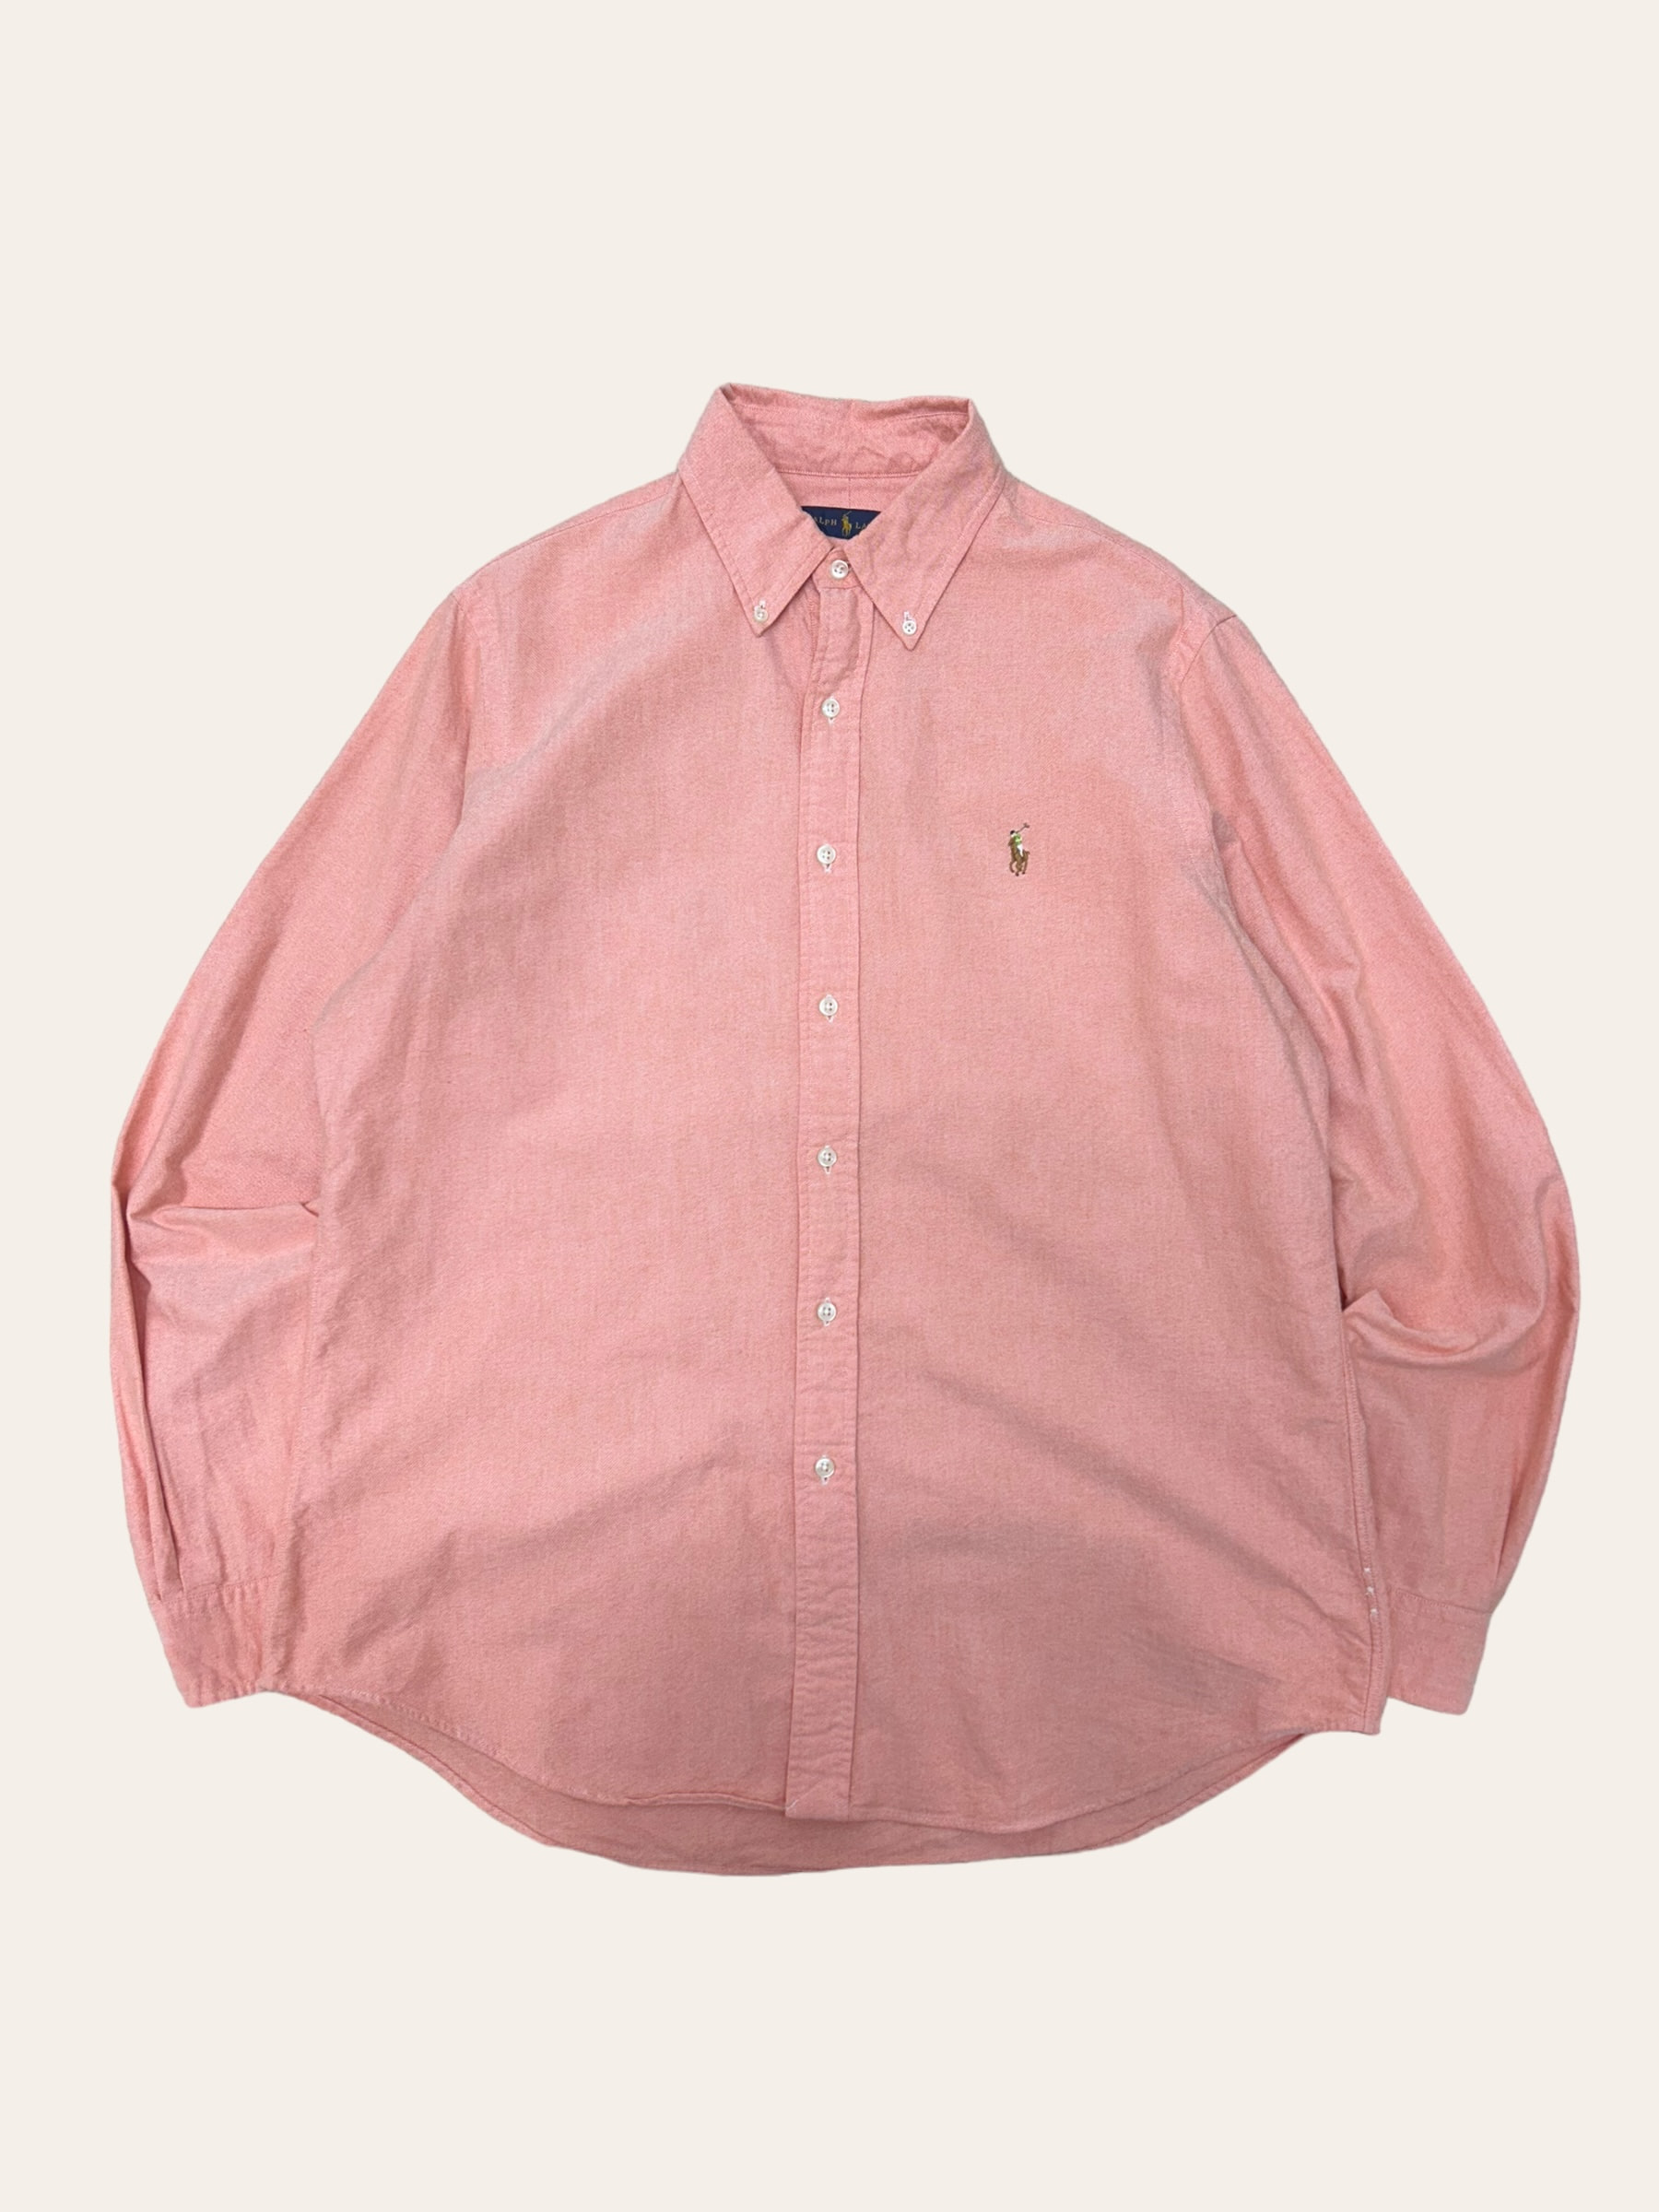 (From USA)Polo ralph lauren peach color oxford shirt L